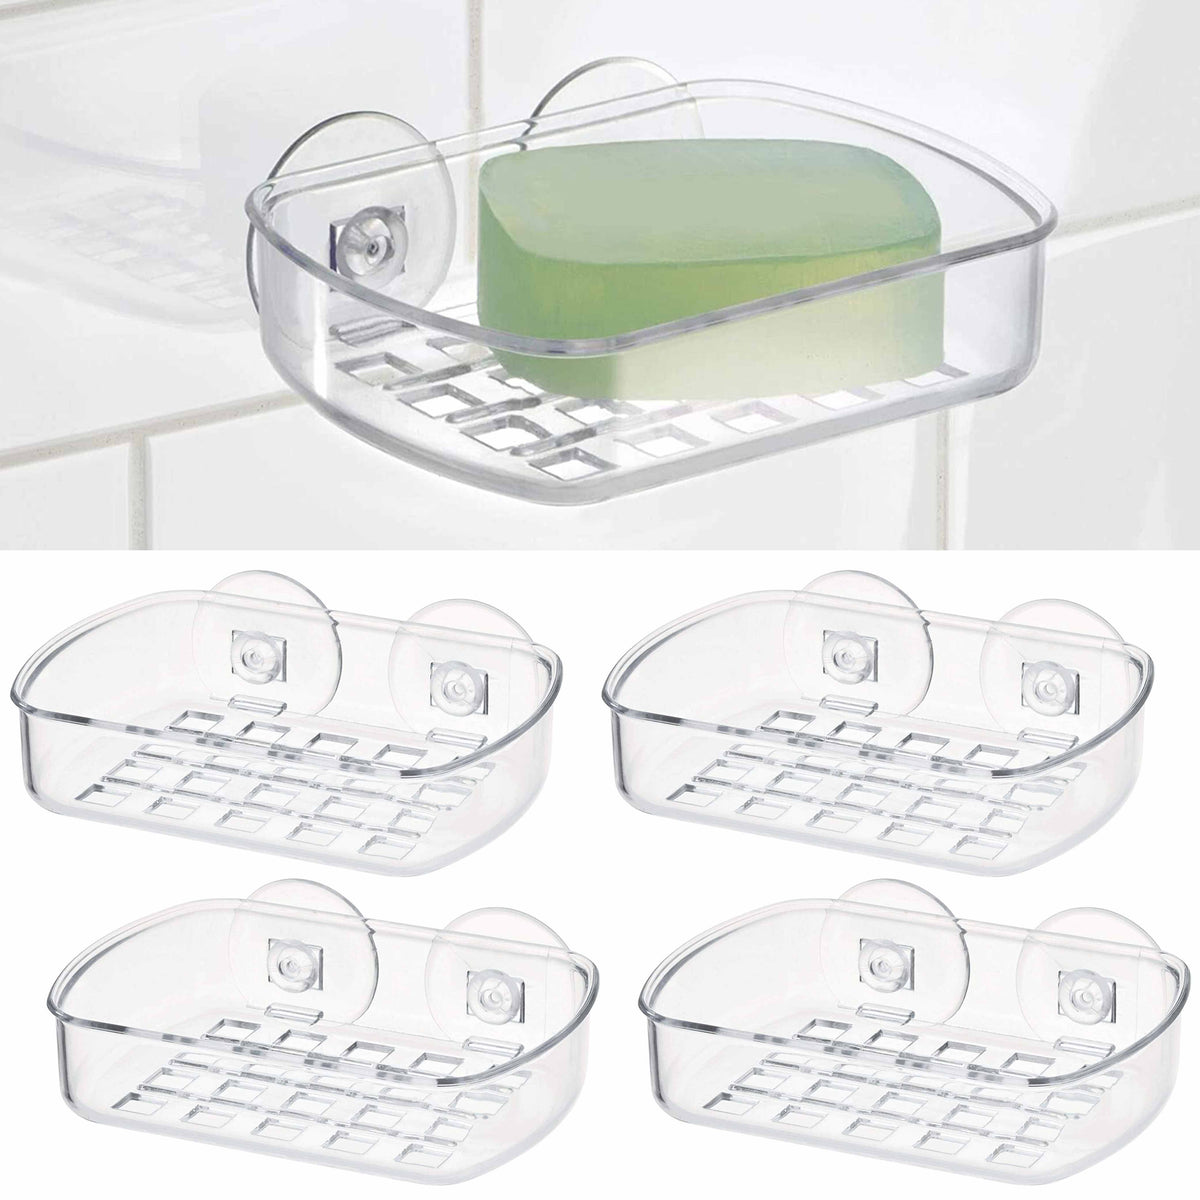 2 Pc Soap Saver Holder Suction Pads Soap Dish Bathtub Laundry